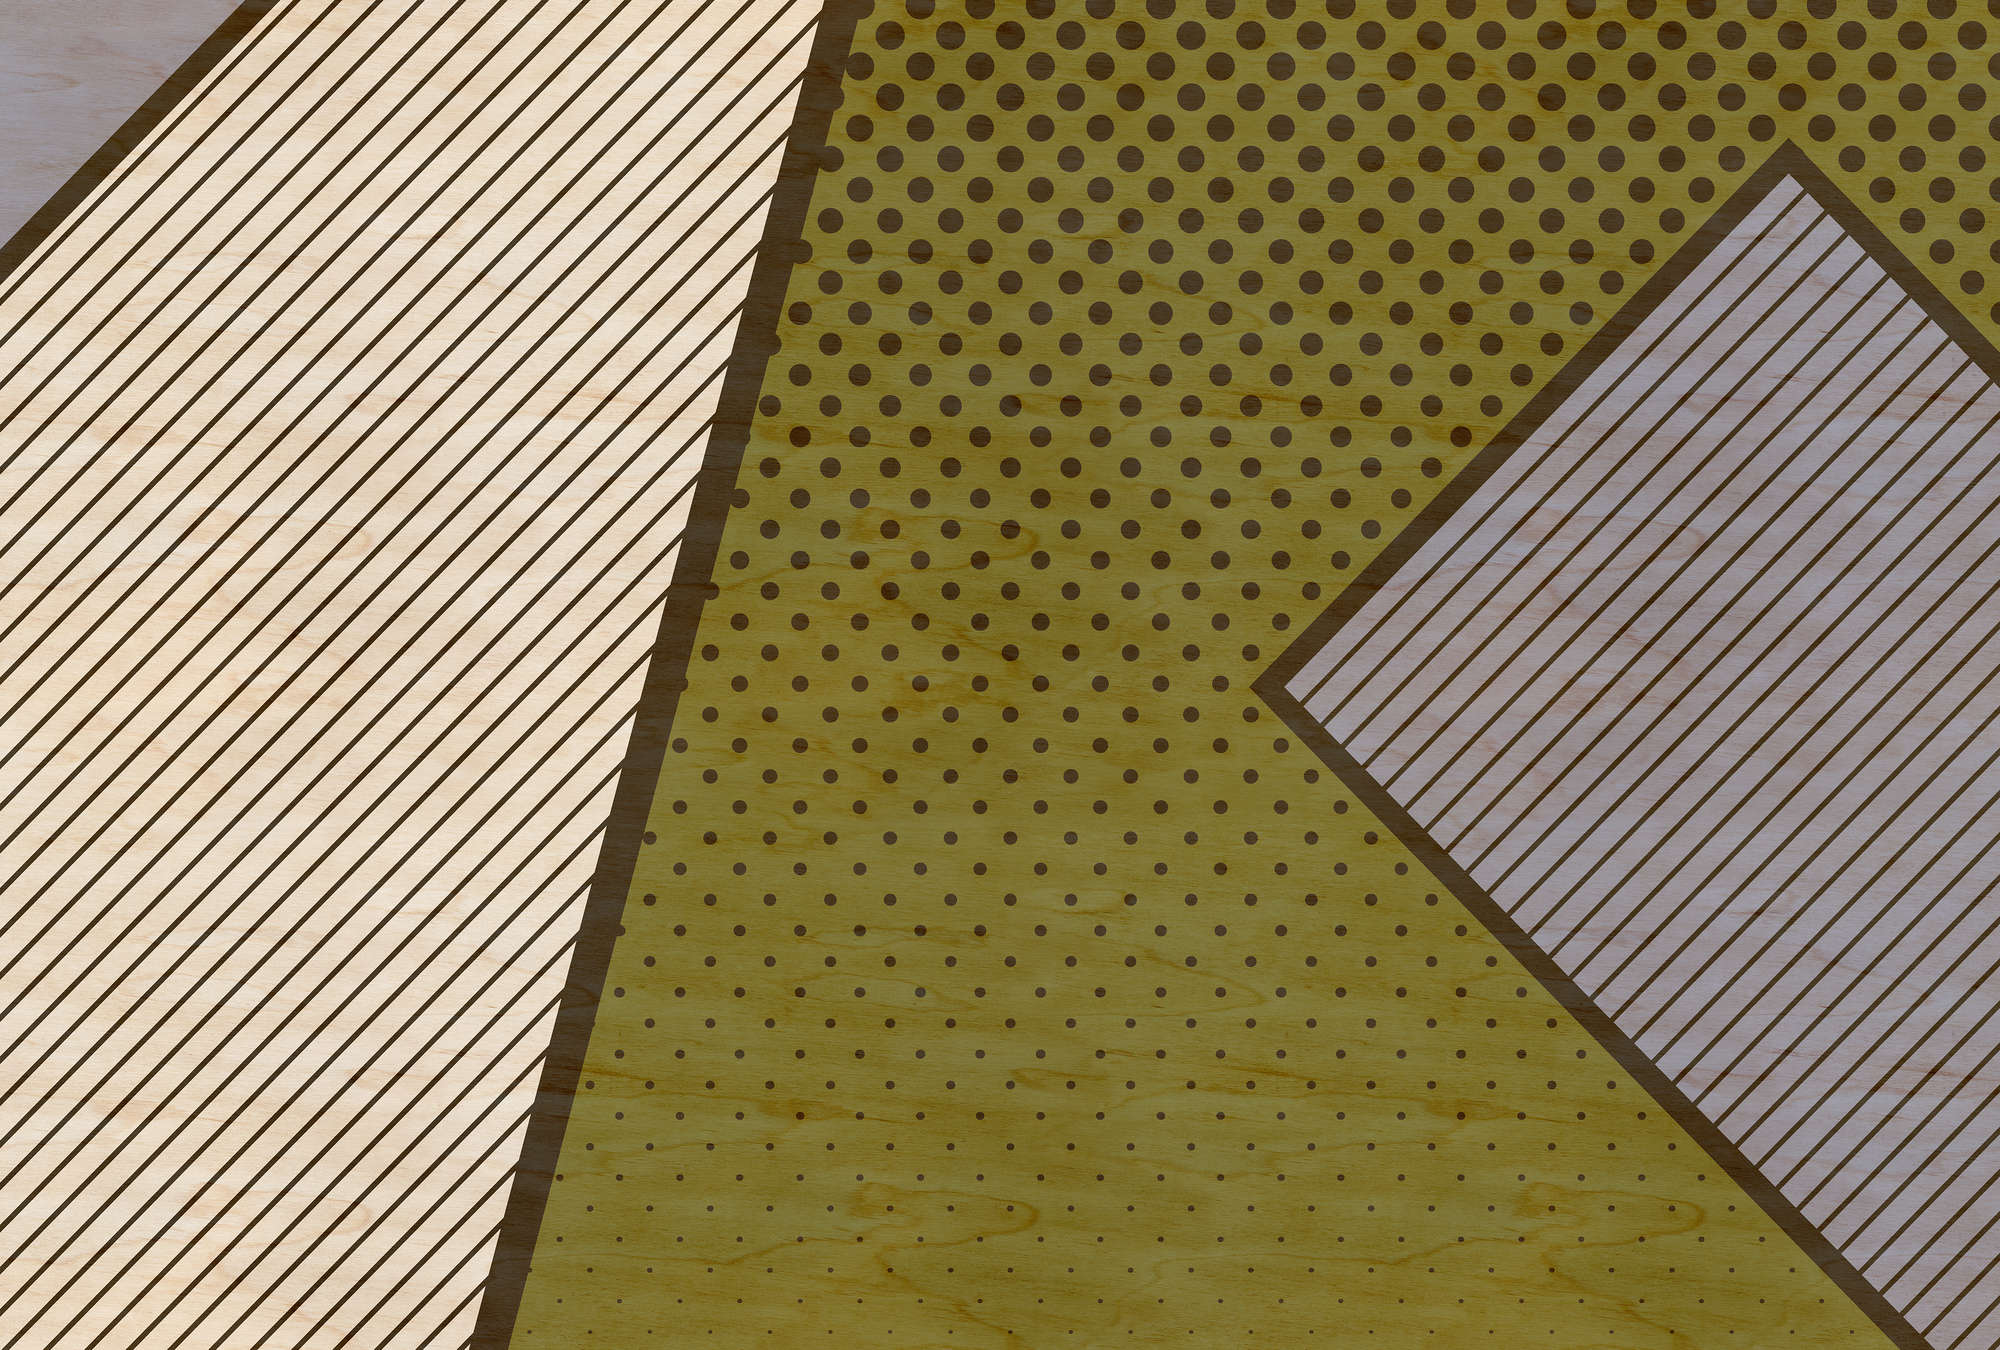             Vogelbende 2 - Digital behang, modern pop art stijl patroon - multiplex structuur - Beige, Geel | Pearl glad non-woven
        